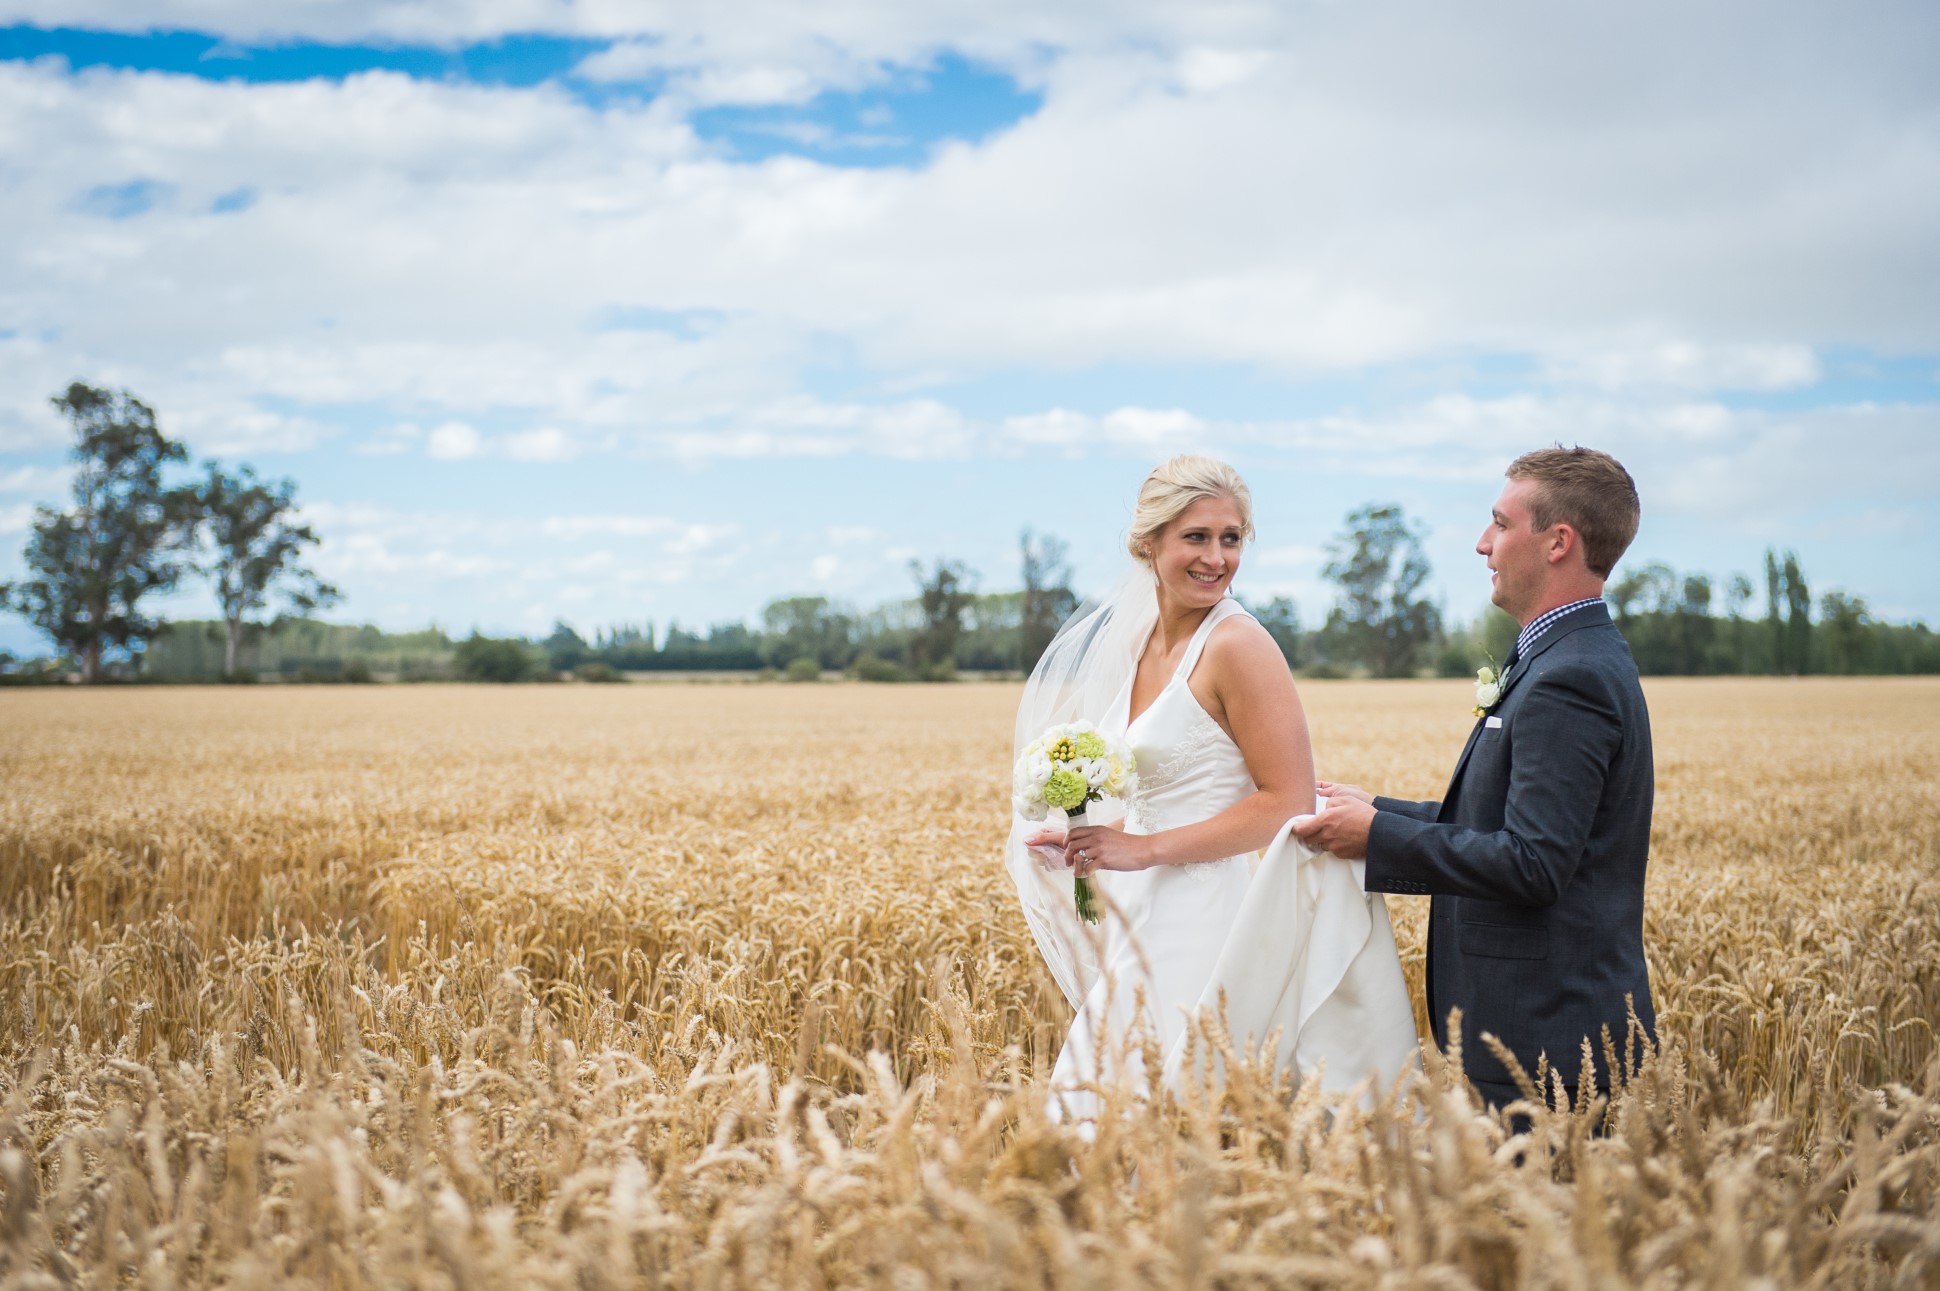 Bride and groom in open field